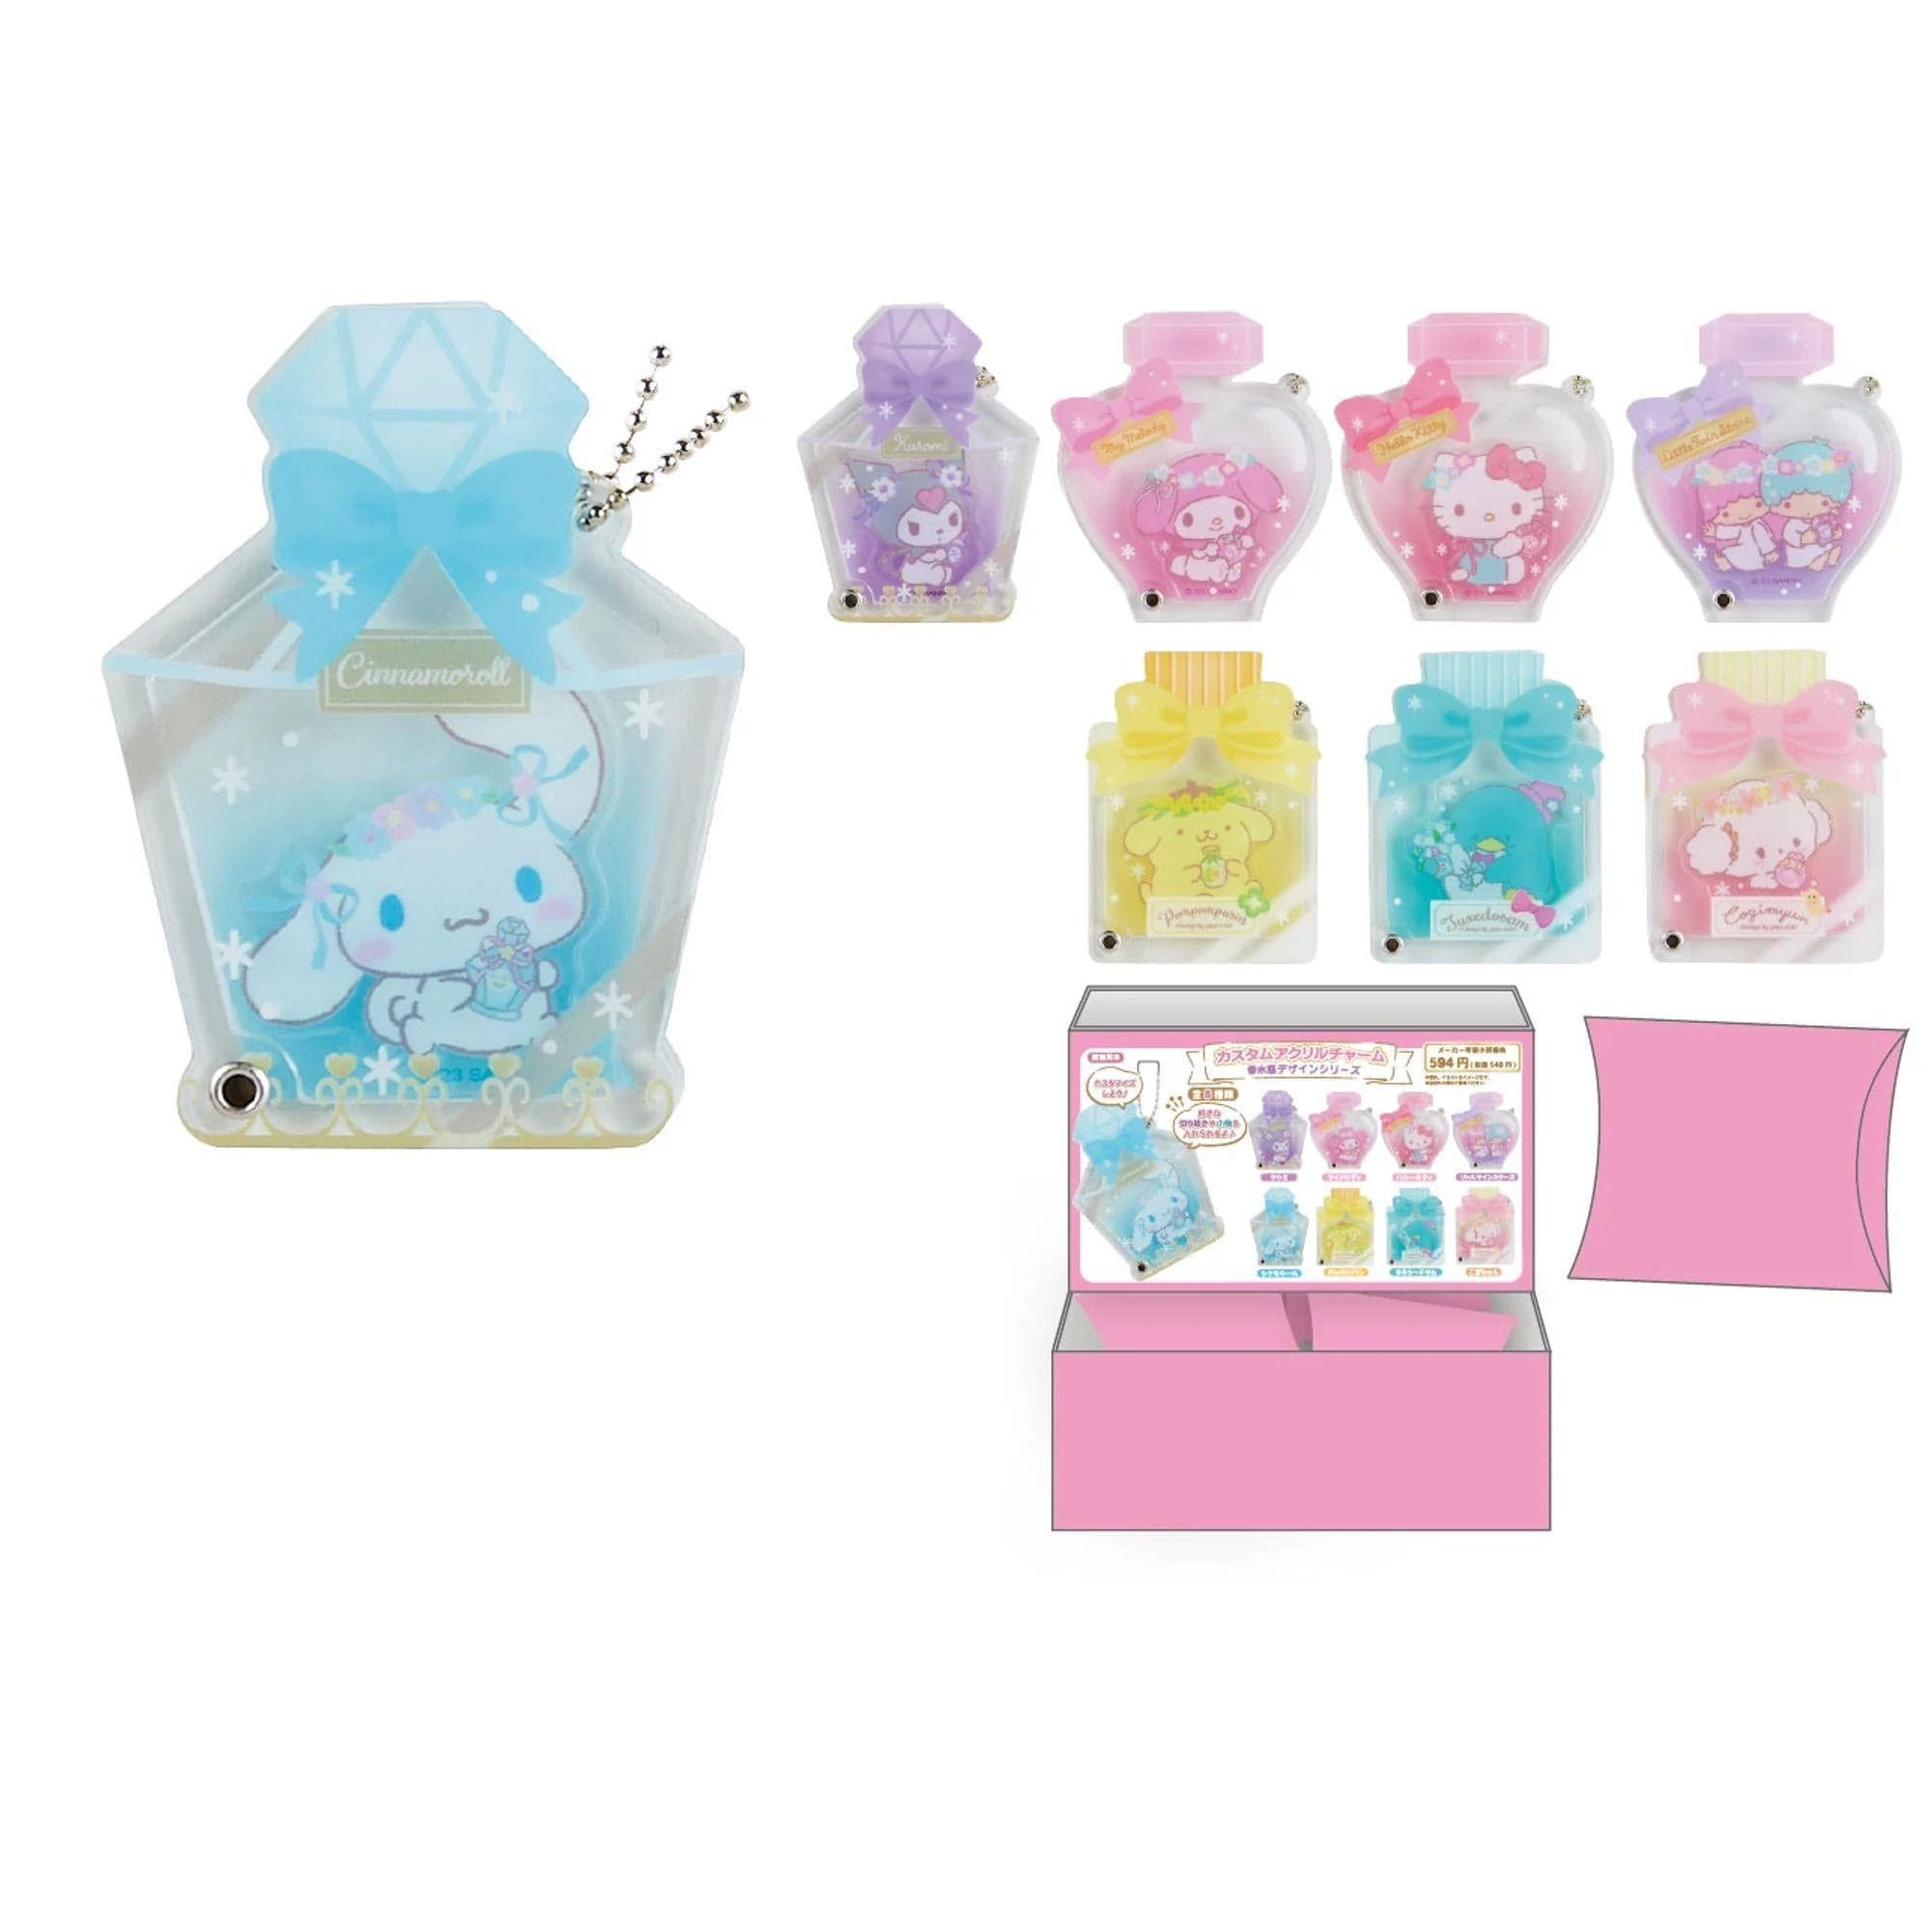 Enesco Sanrio Dreamy Bottle Surprise Acrylic Charm Kawaii Gifts 4550337007976